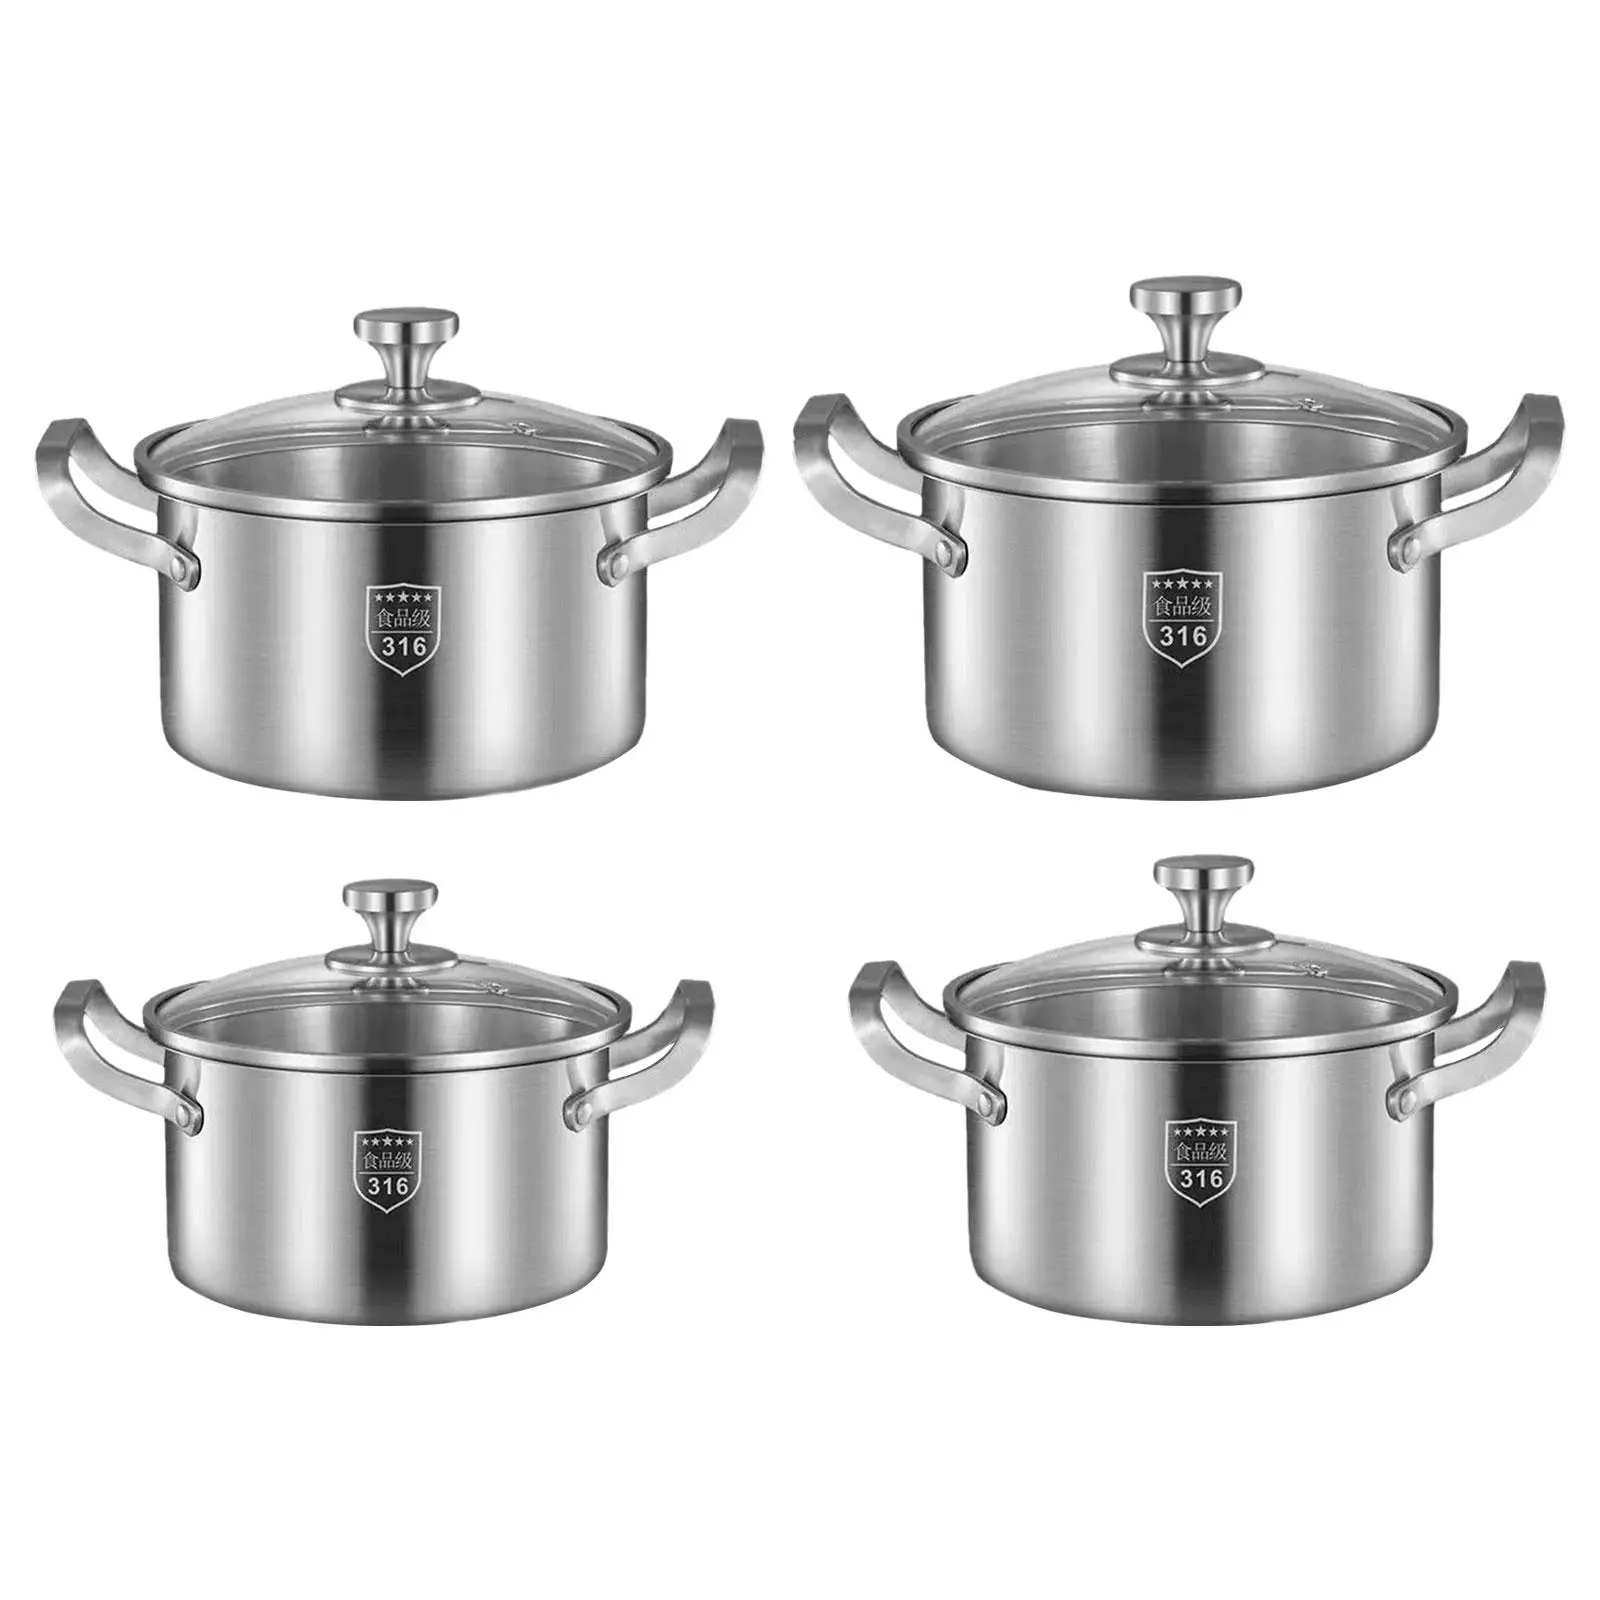 Soup Pot Ergonomic Handle Cooking Tools Cookware Nonstick Pan Frying Pan Cooking Pot for Kitchen Countertop Restaurant Bar